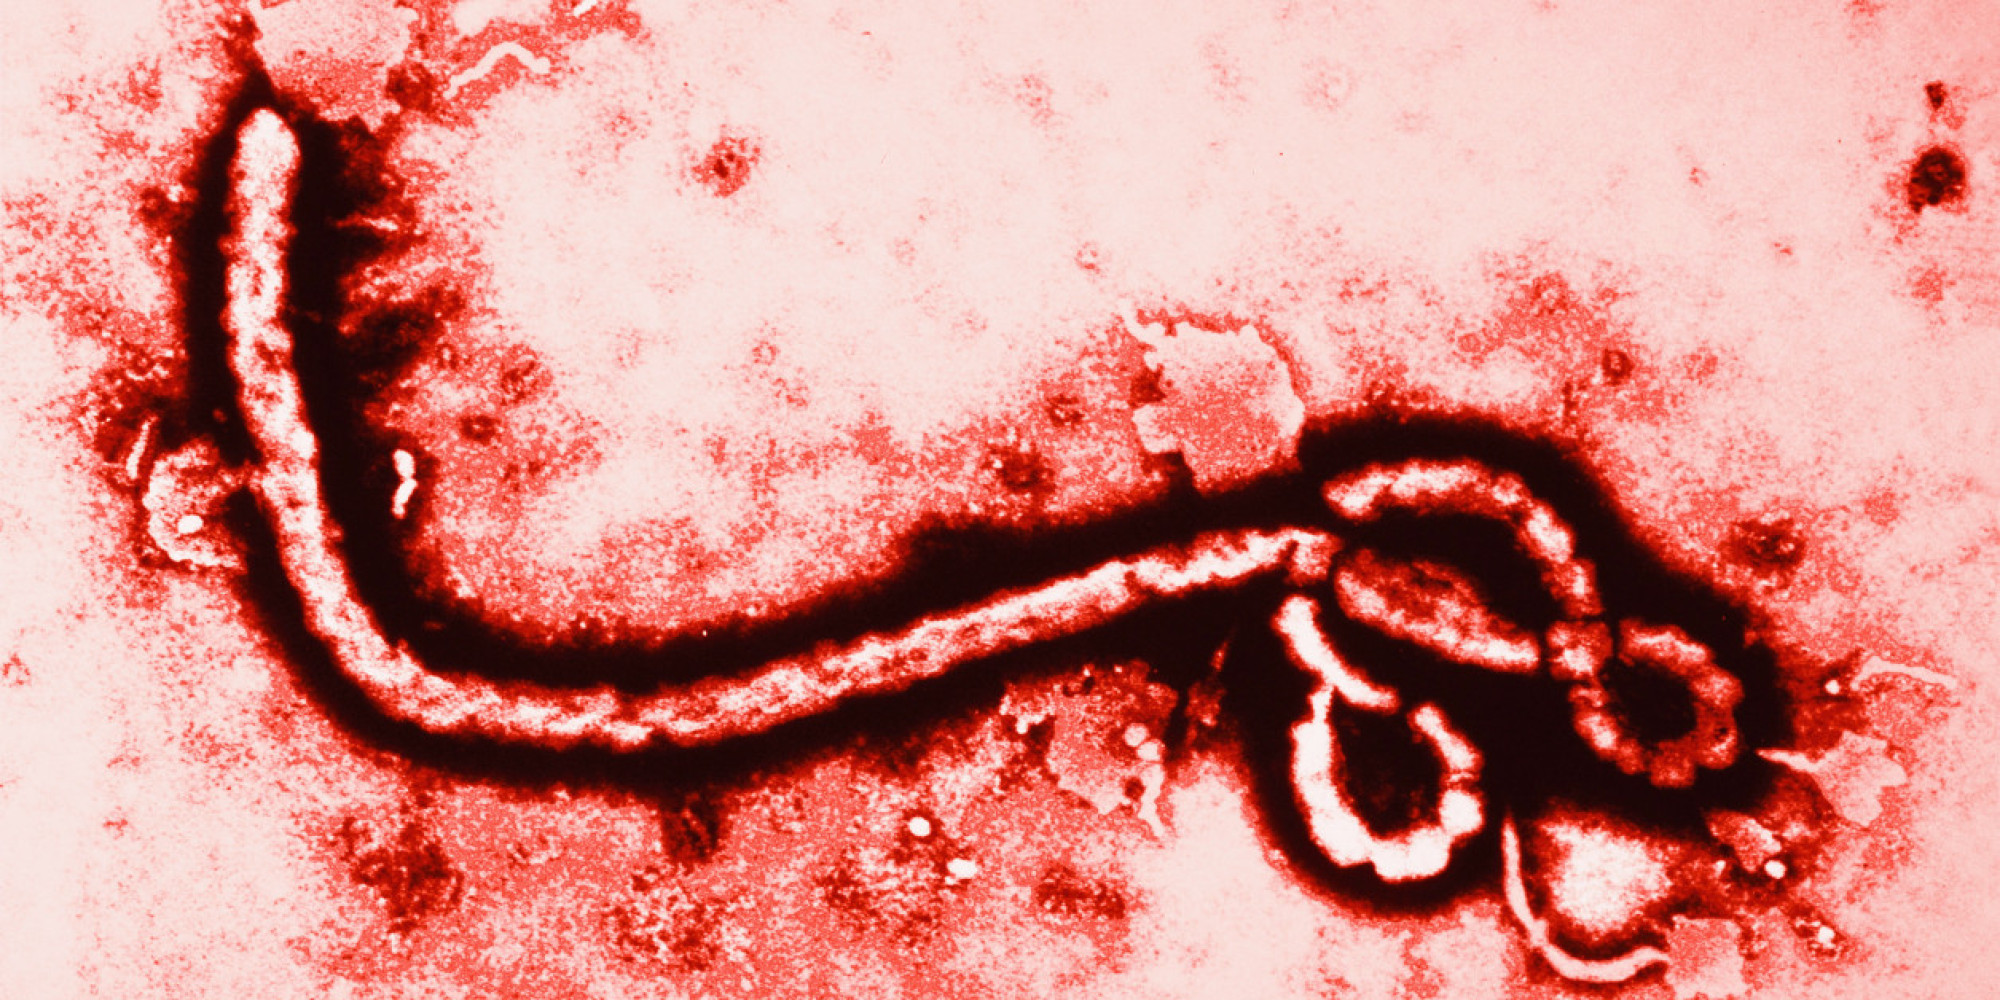 Shep Smith’s rejoinder to “irresponsible” Ebola coverage